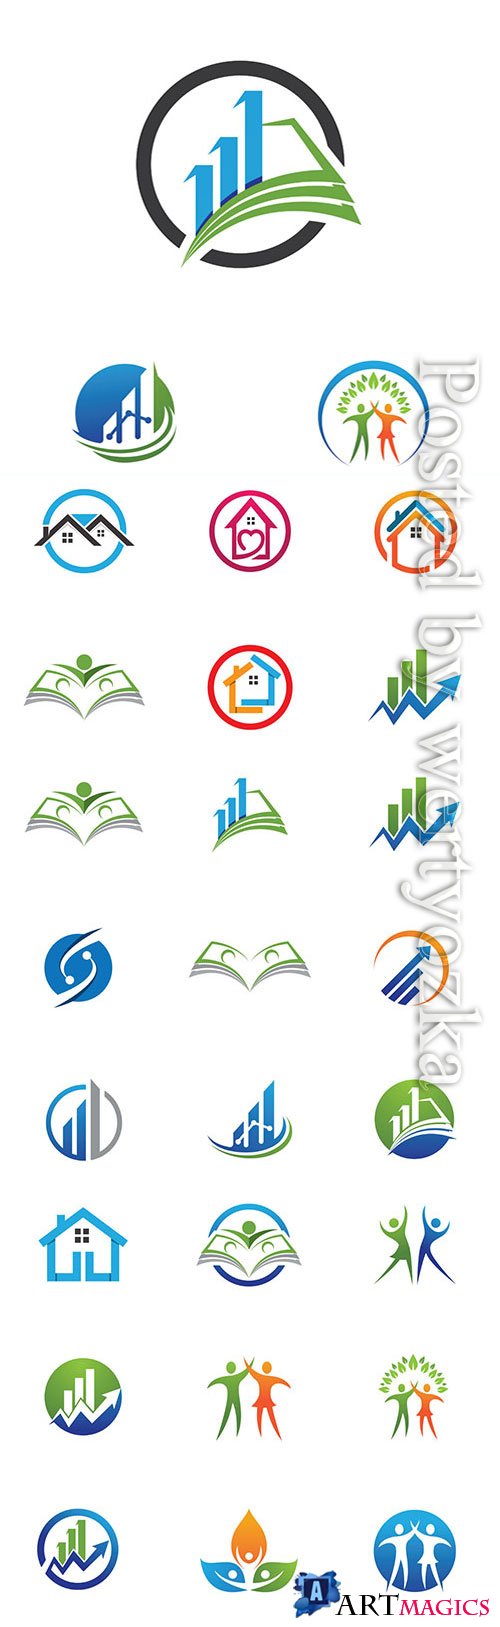 Various logos in vector